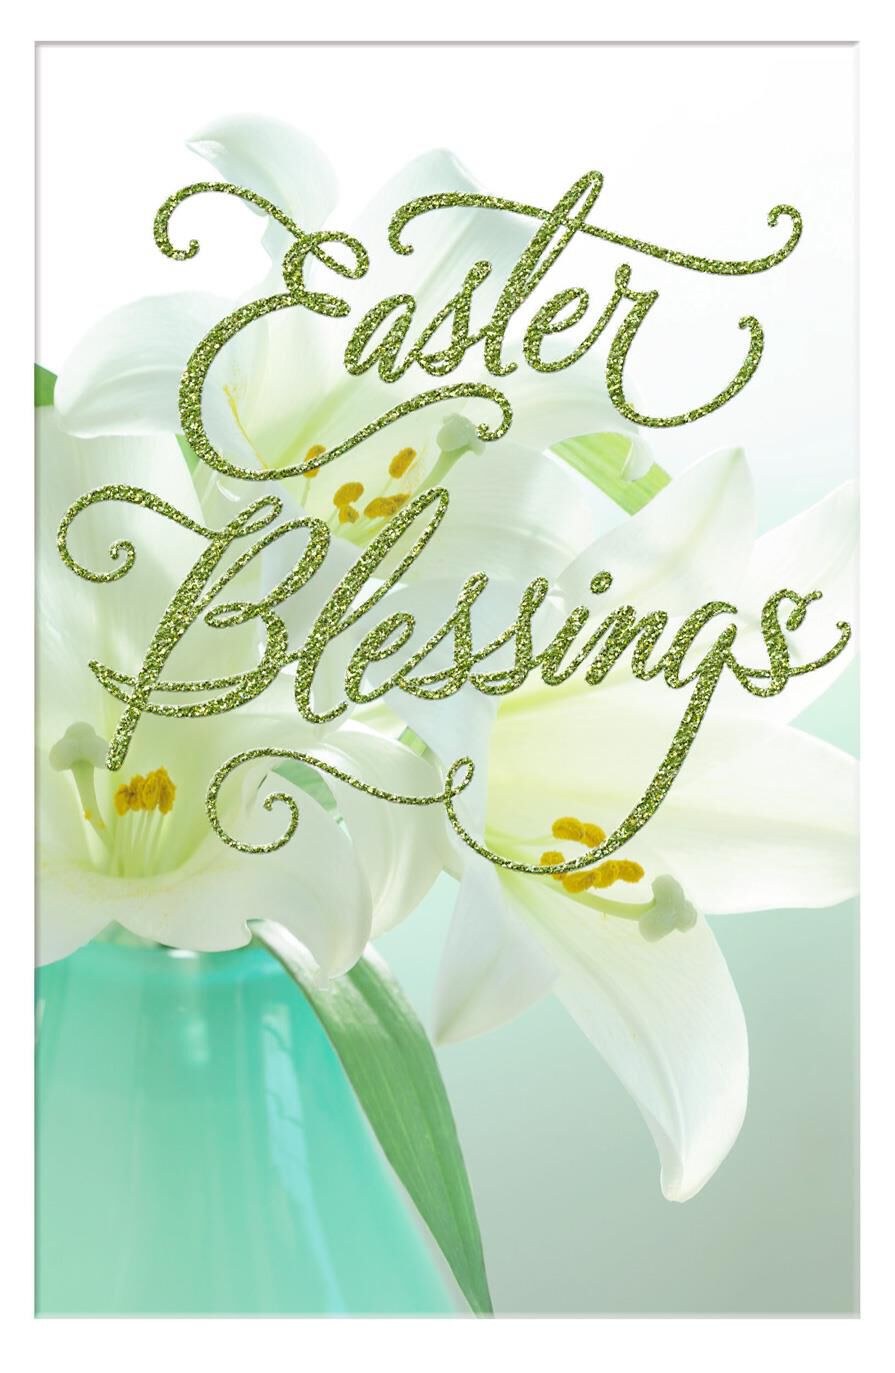 Free Printable Easter Card Religious